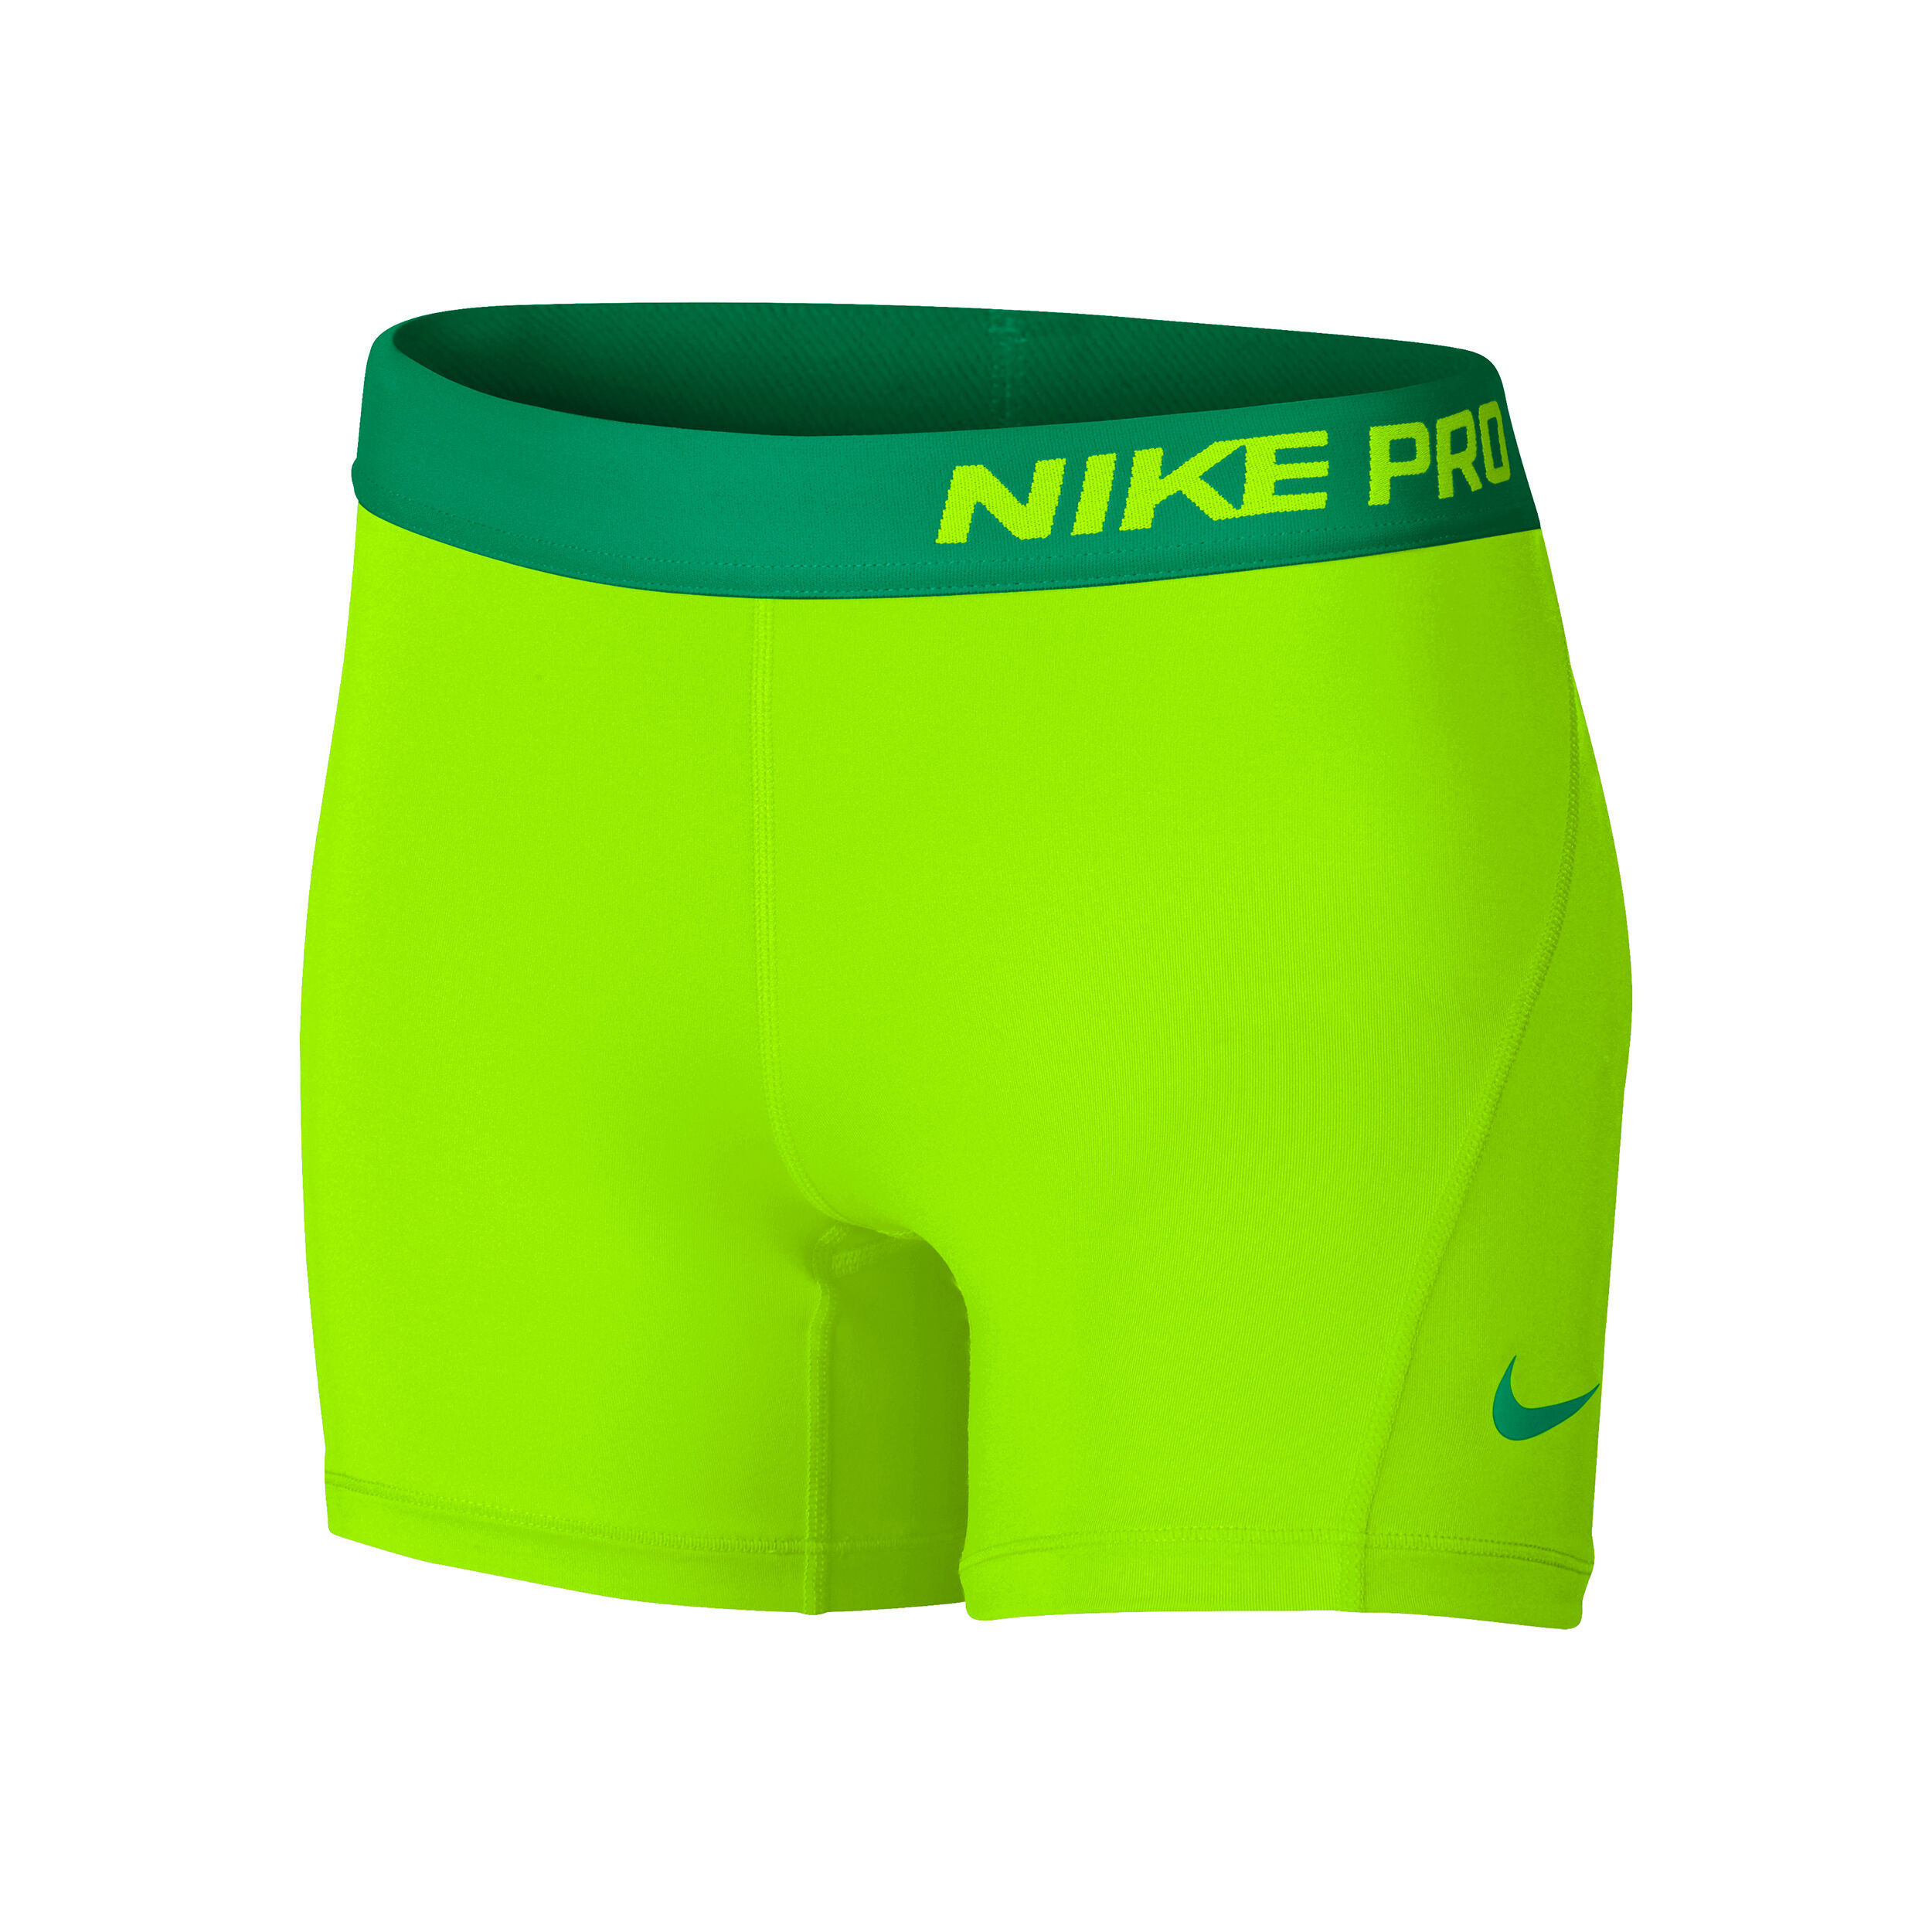 nike pro shorts lime green